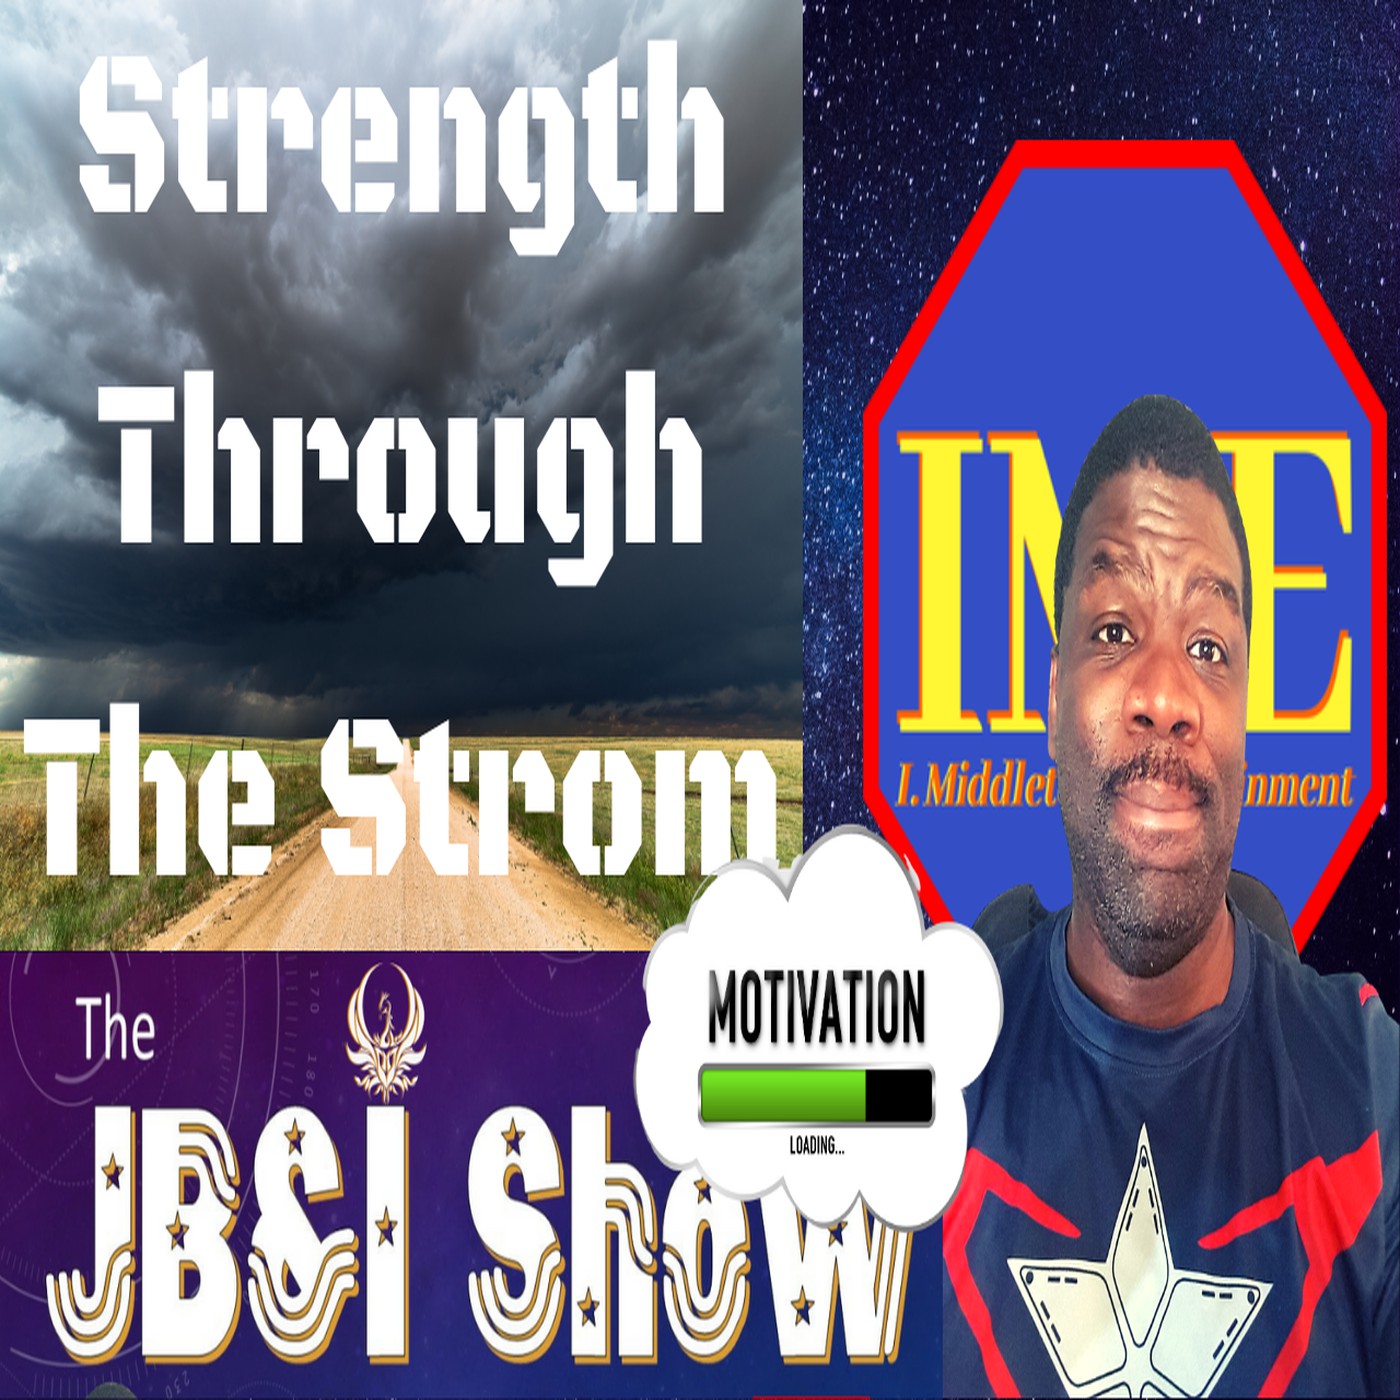 The JB&I Show Podcast